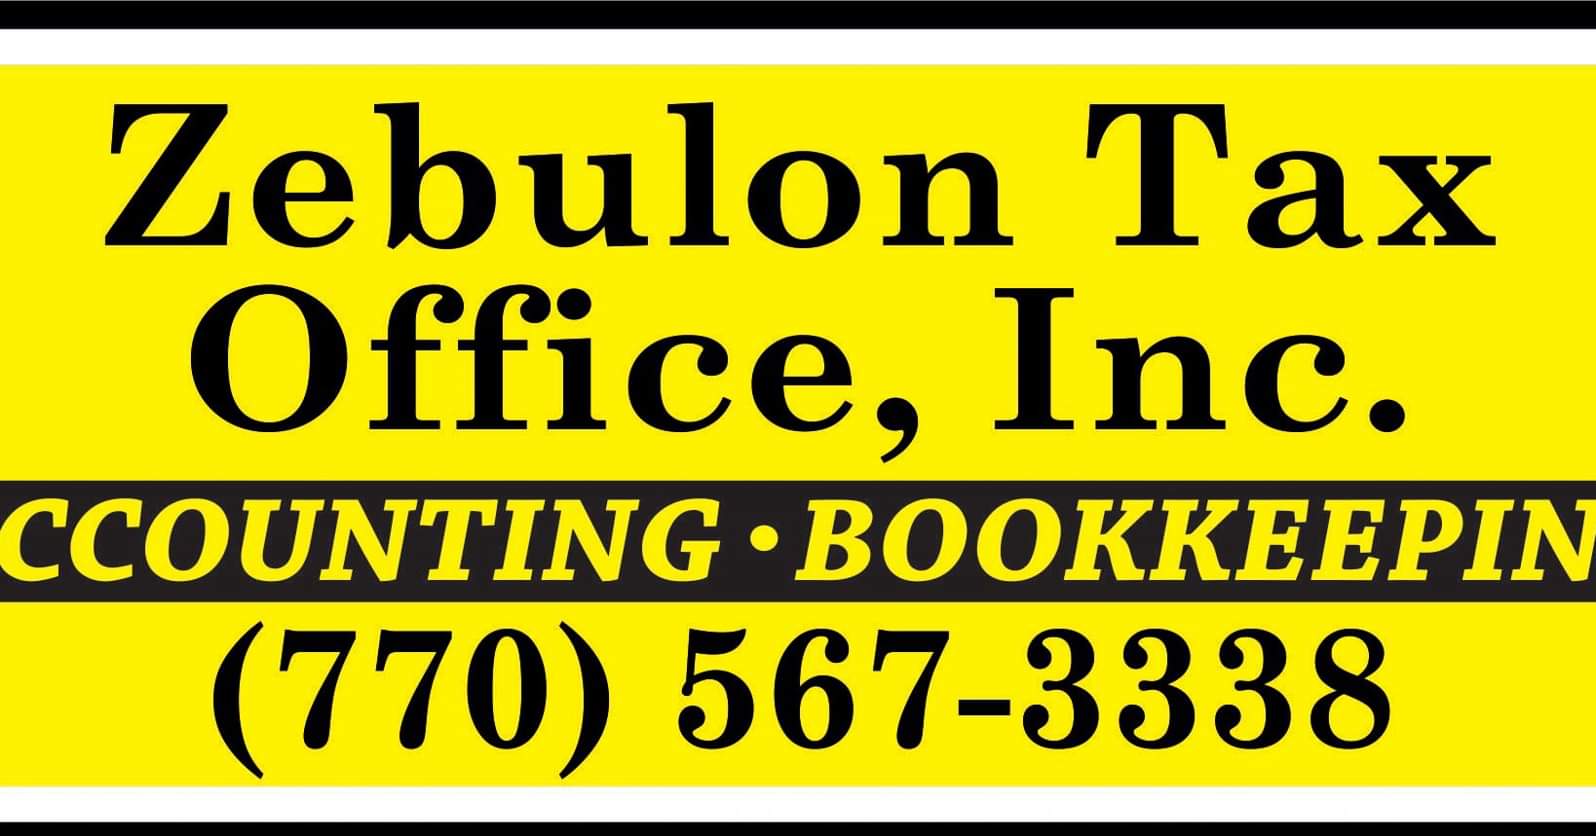 Zebulon Tax Office Inc